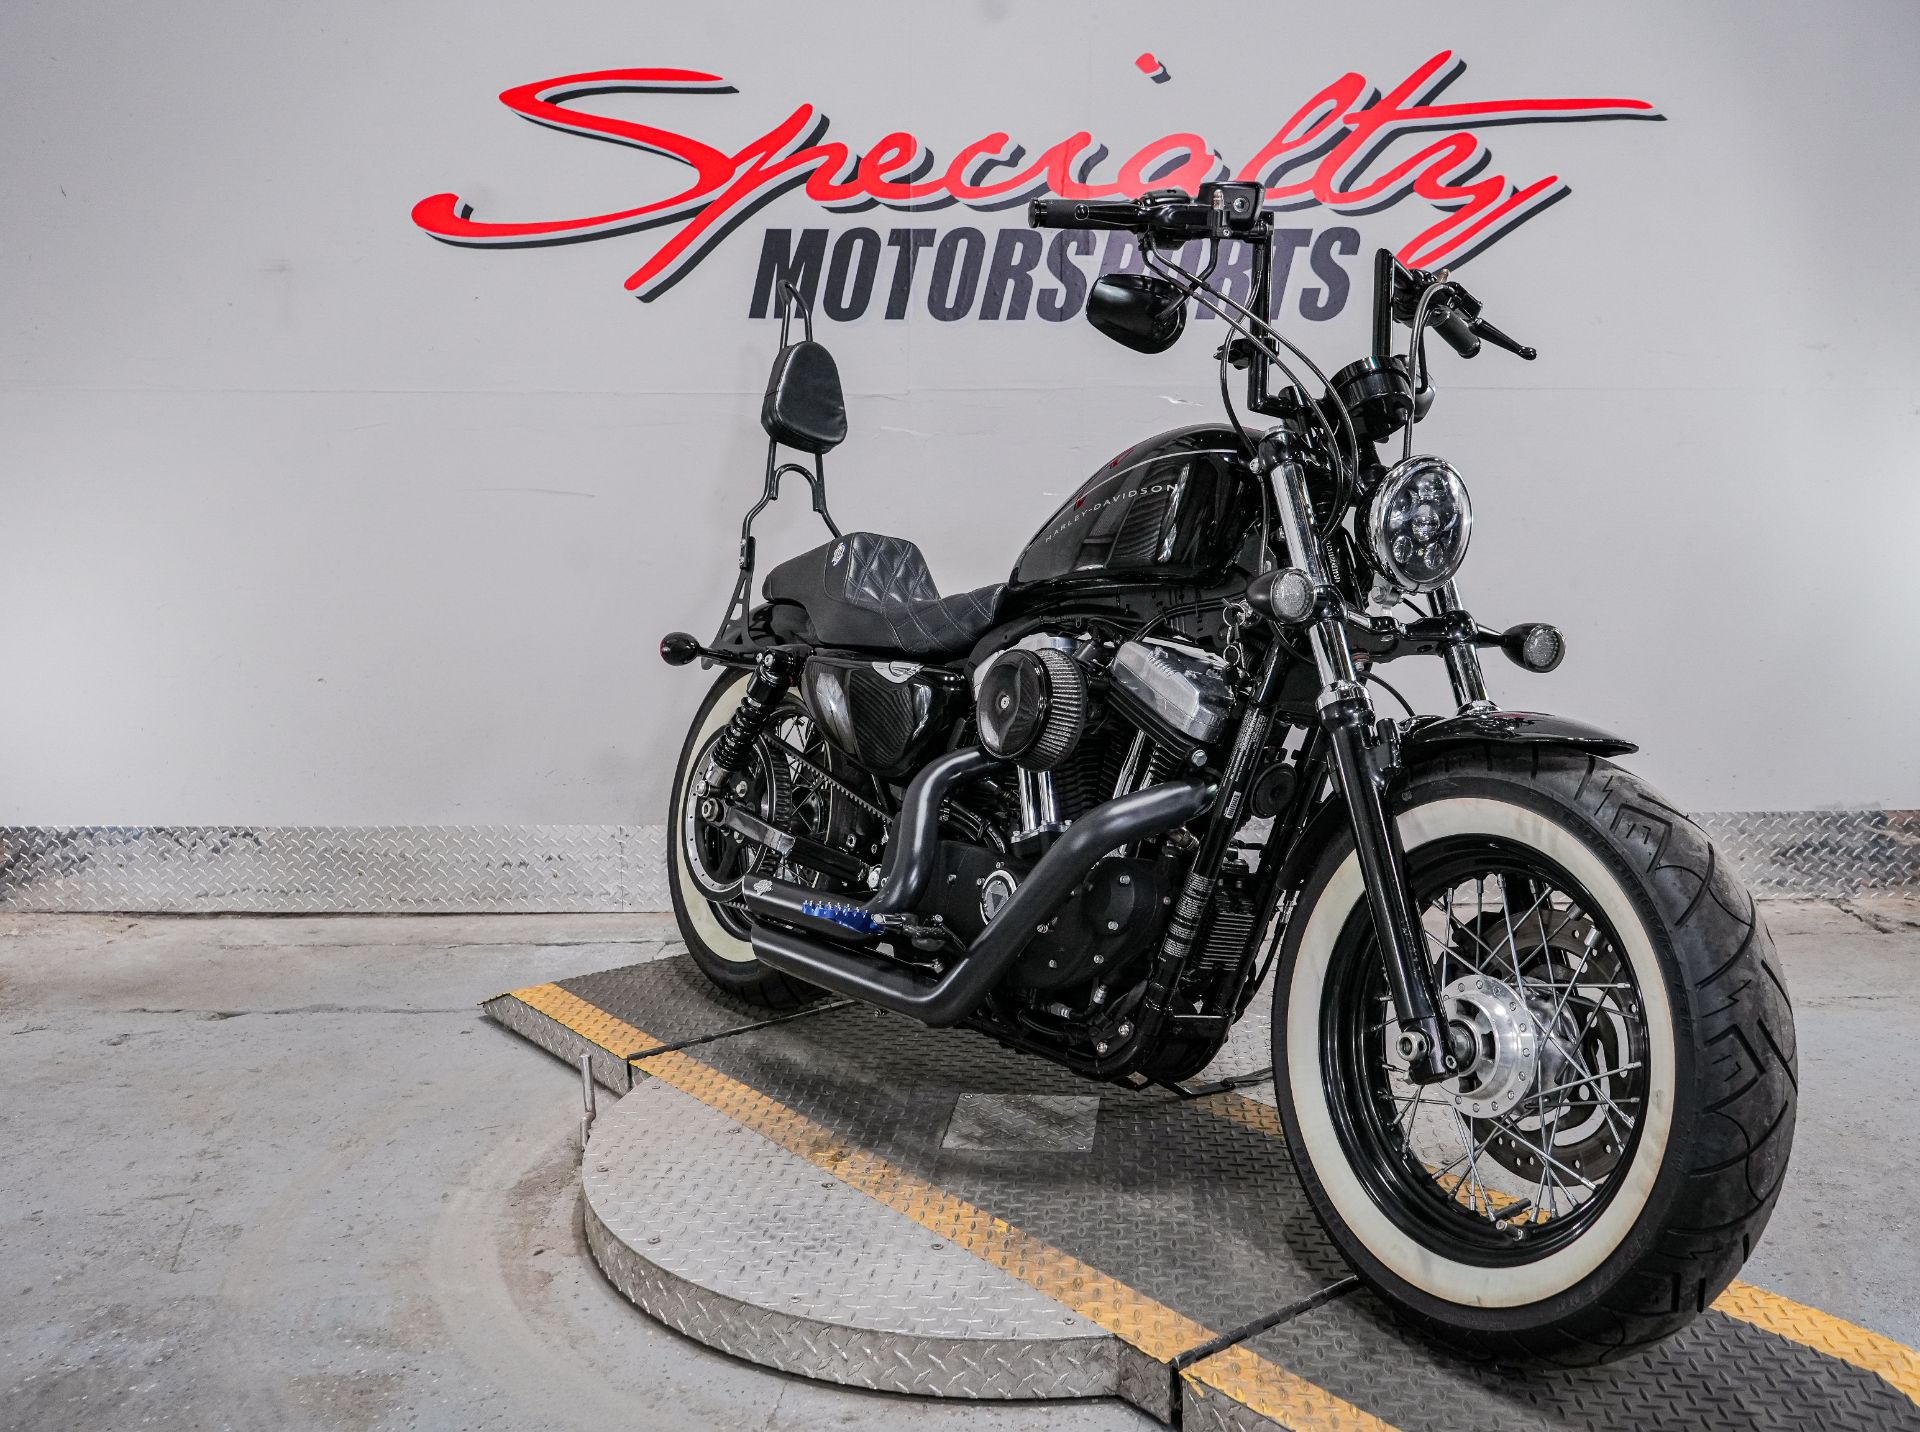 2013 Harley-Davidson Sportster® Forty-Eight® in Sacramento, California - Photo 7